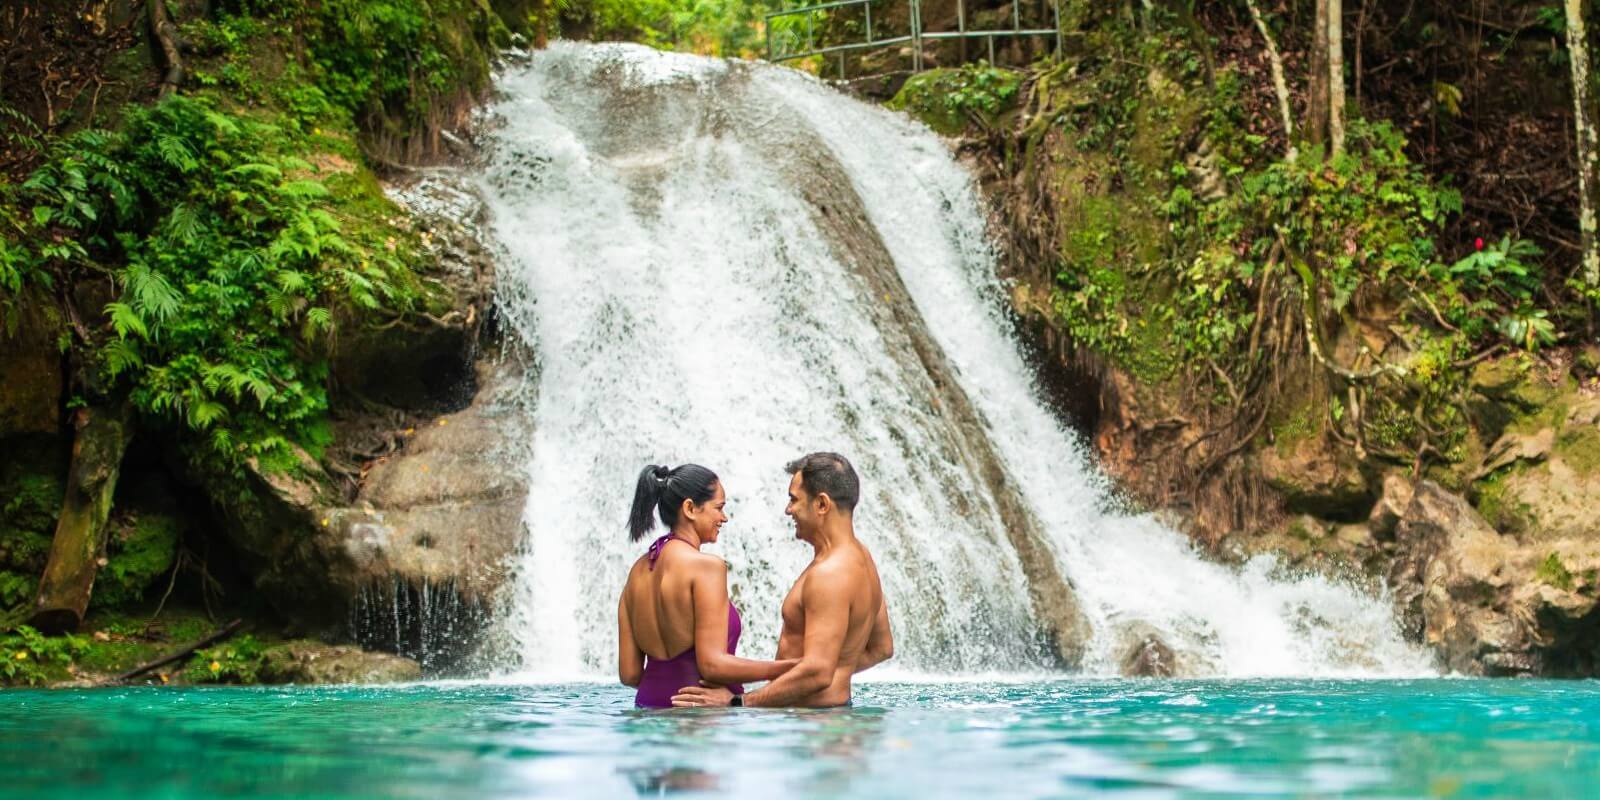 The best waterfall tours in jamacia with www.jamescarvertours.com